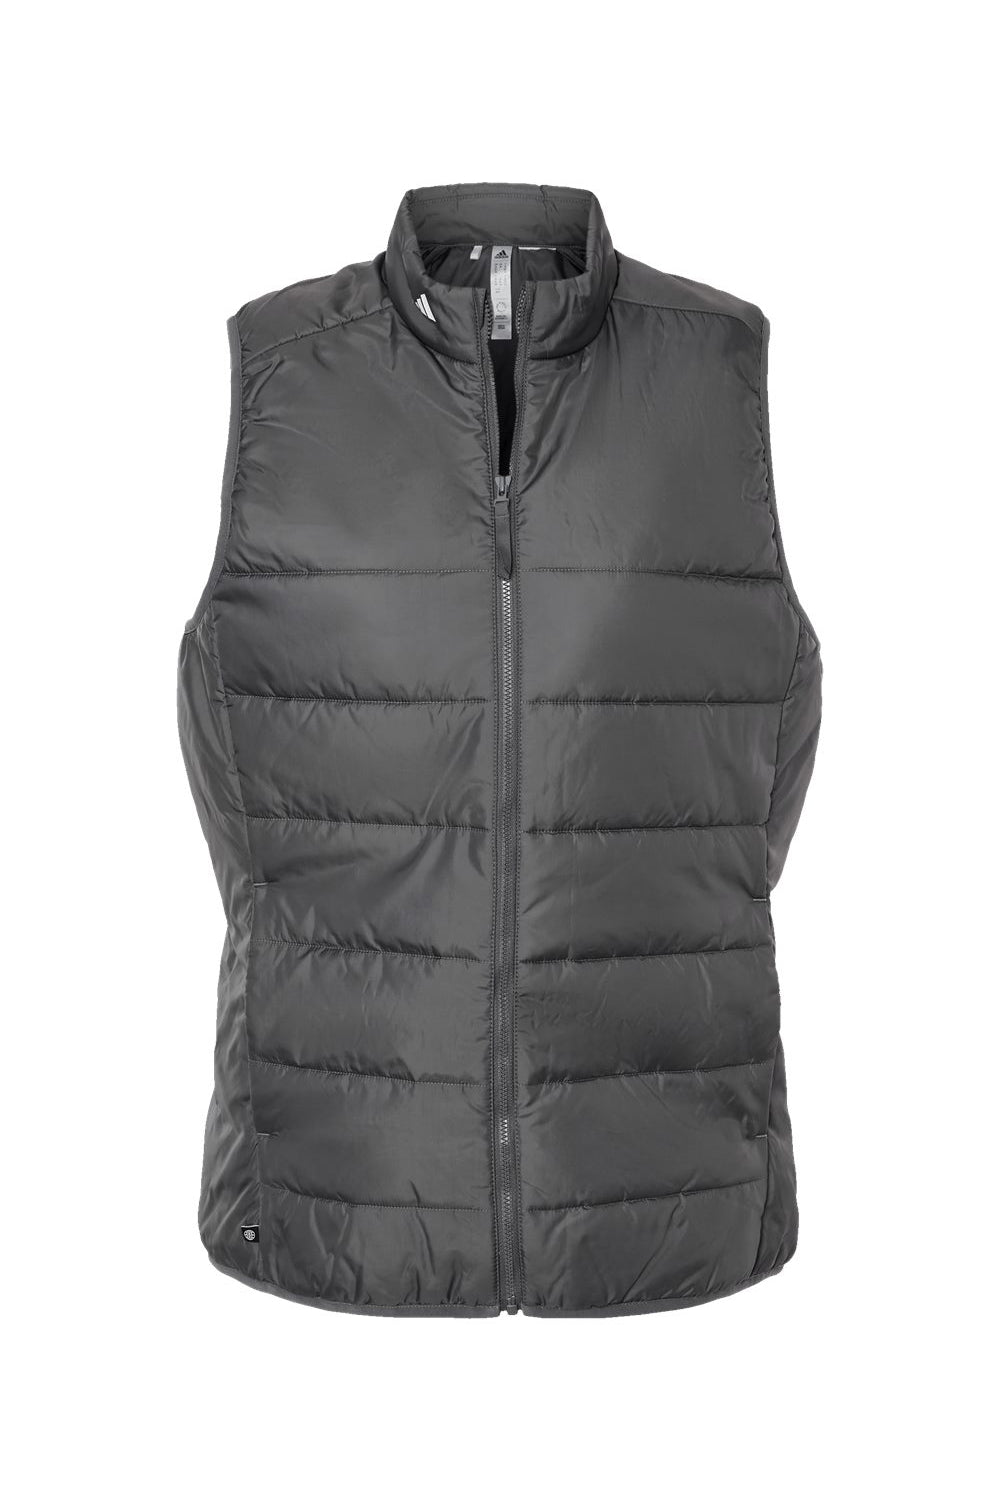 Adidas A573 Womens Full Zip Puffer Vest Grey Flat Front